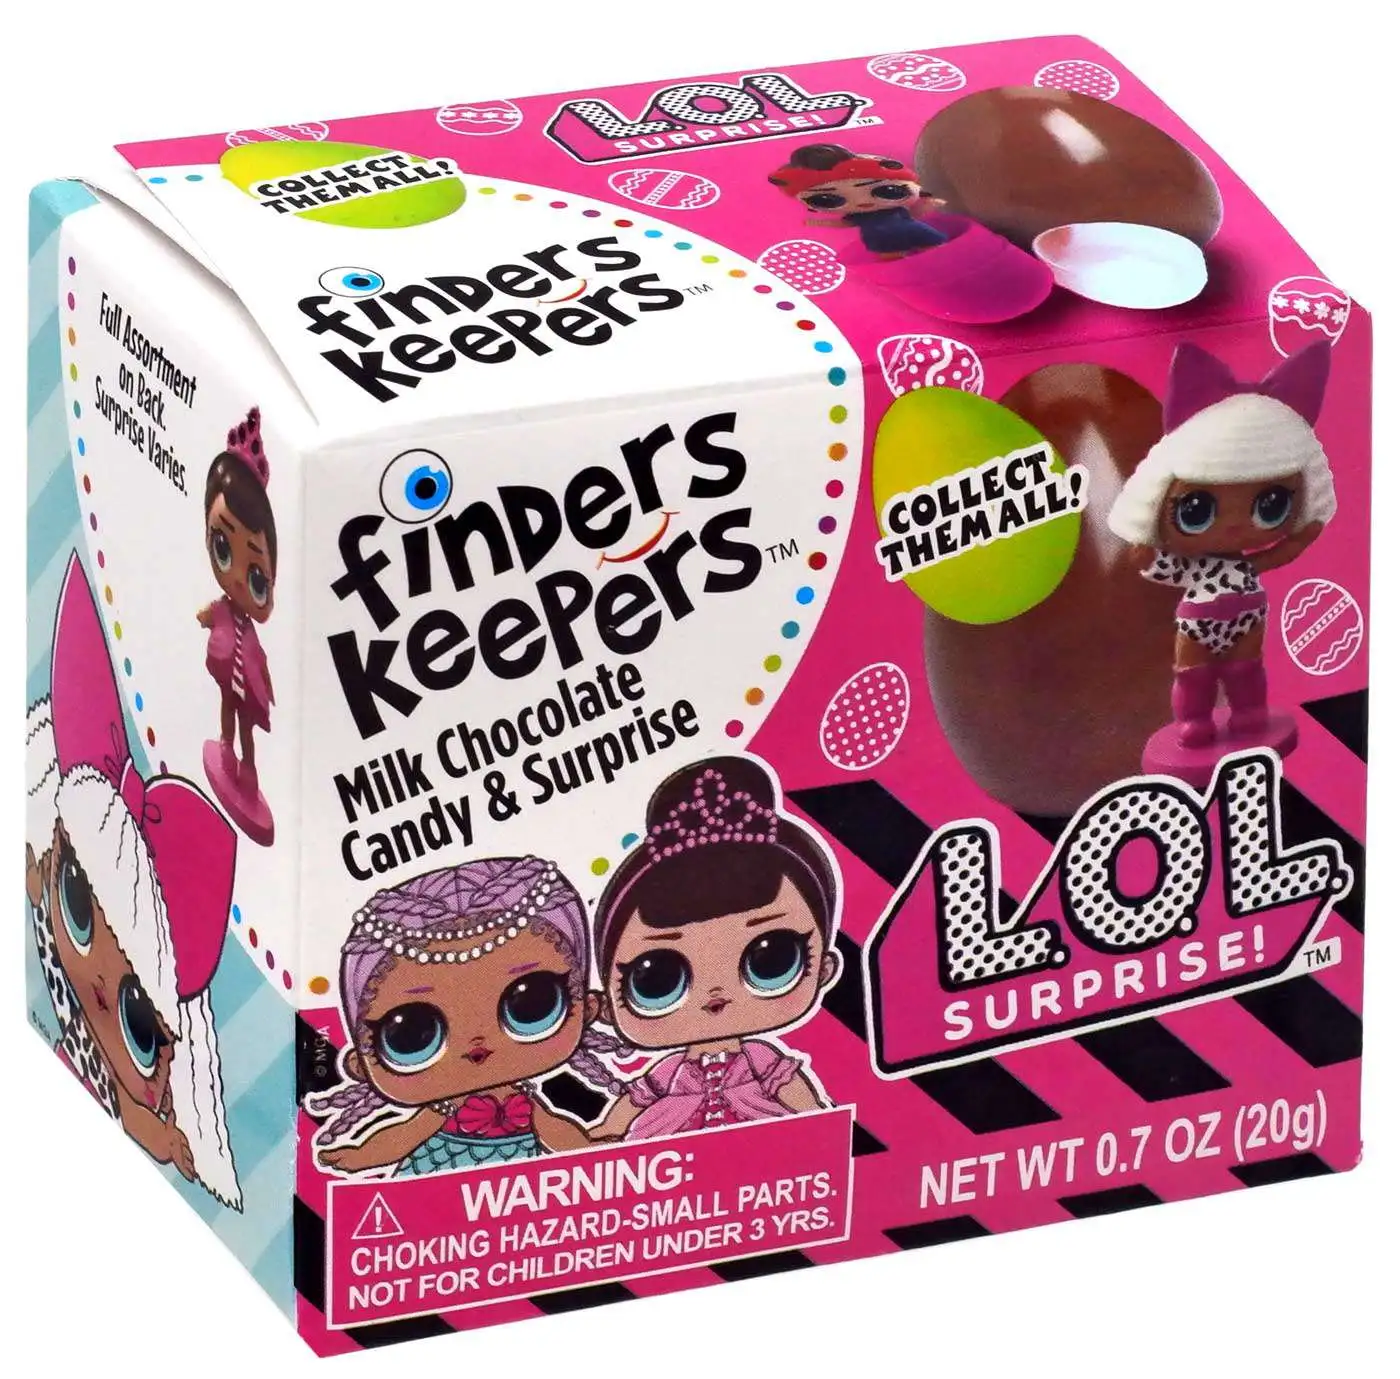 Finders Keepers LOL Surprise! Milk Chocolate & Surprise, New Series 2 - 0.7 oz